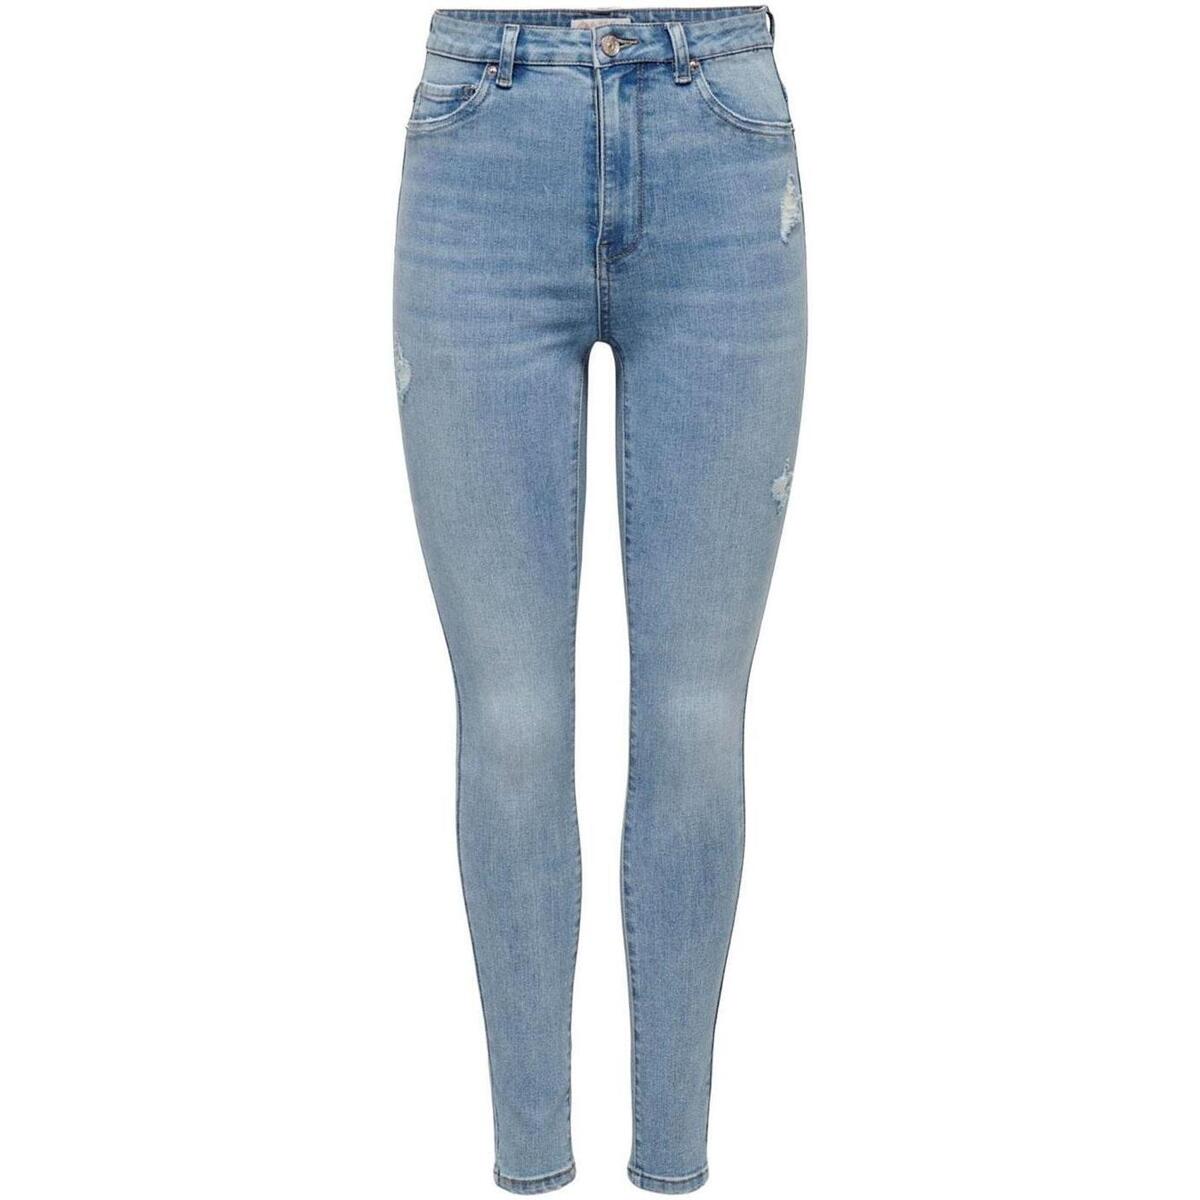 Textiel Jeans Only  Blauw